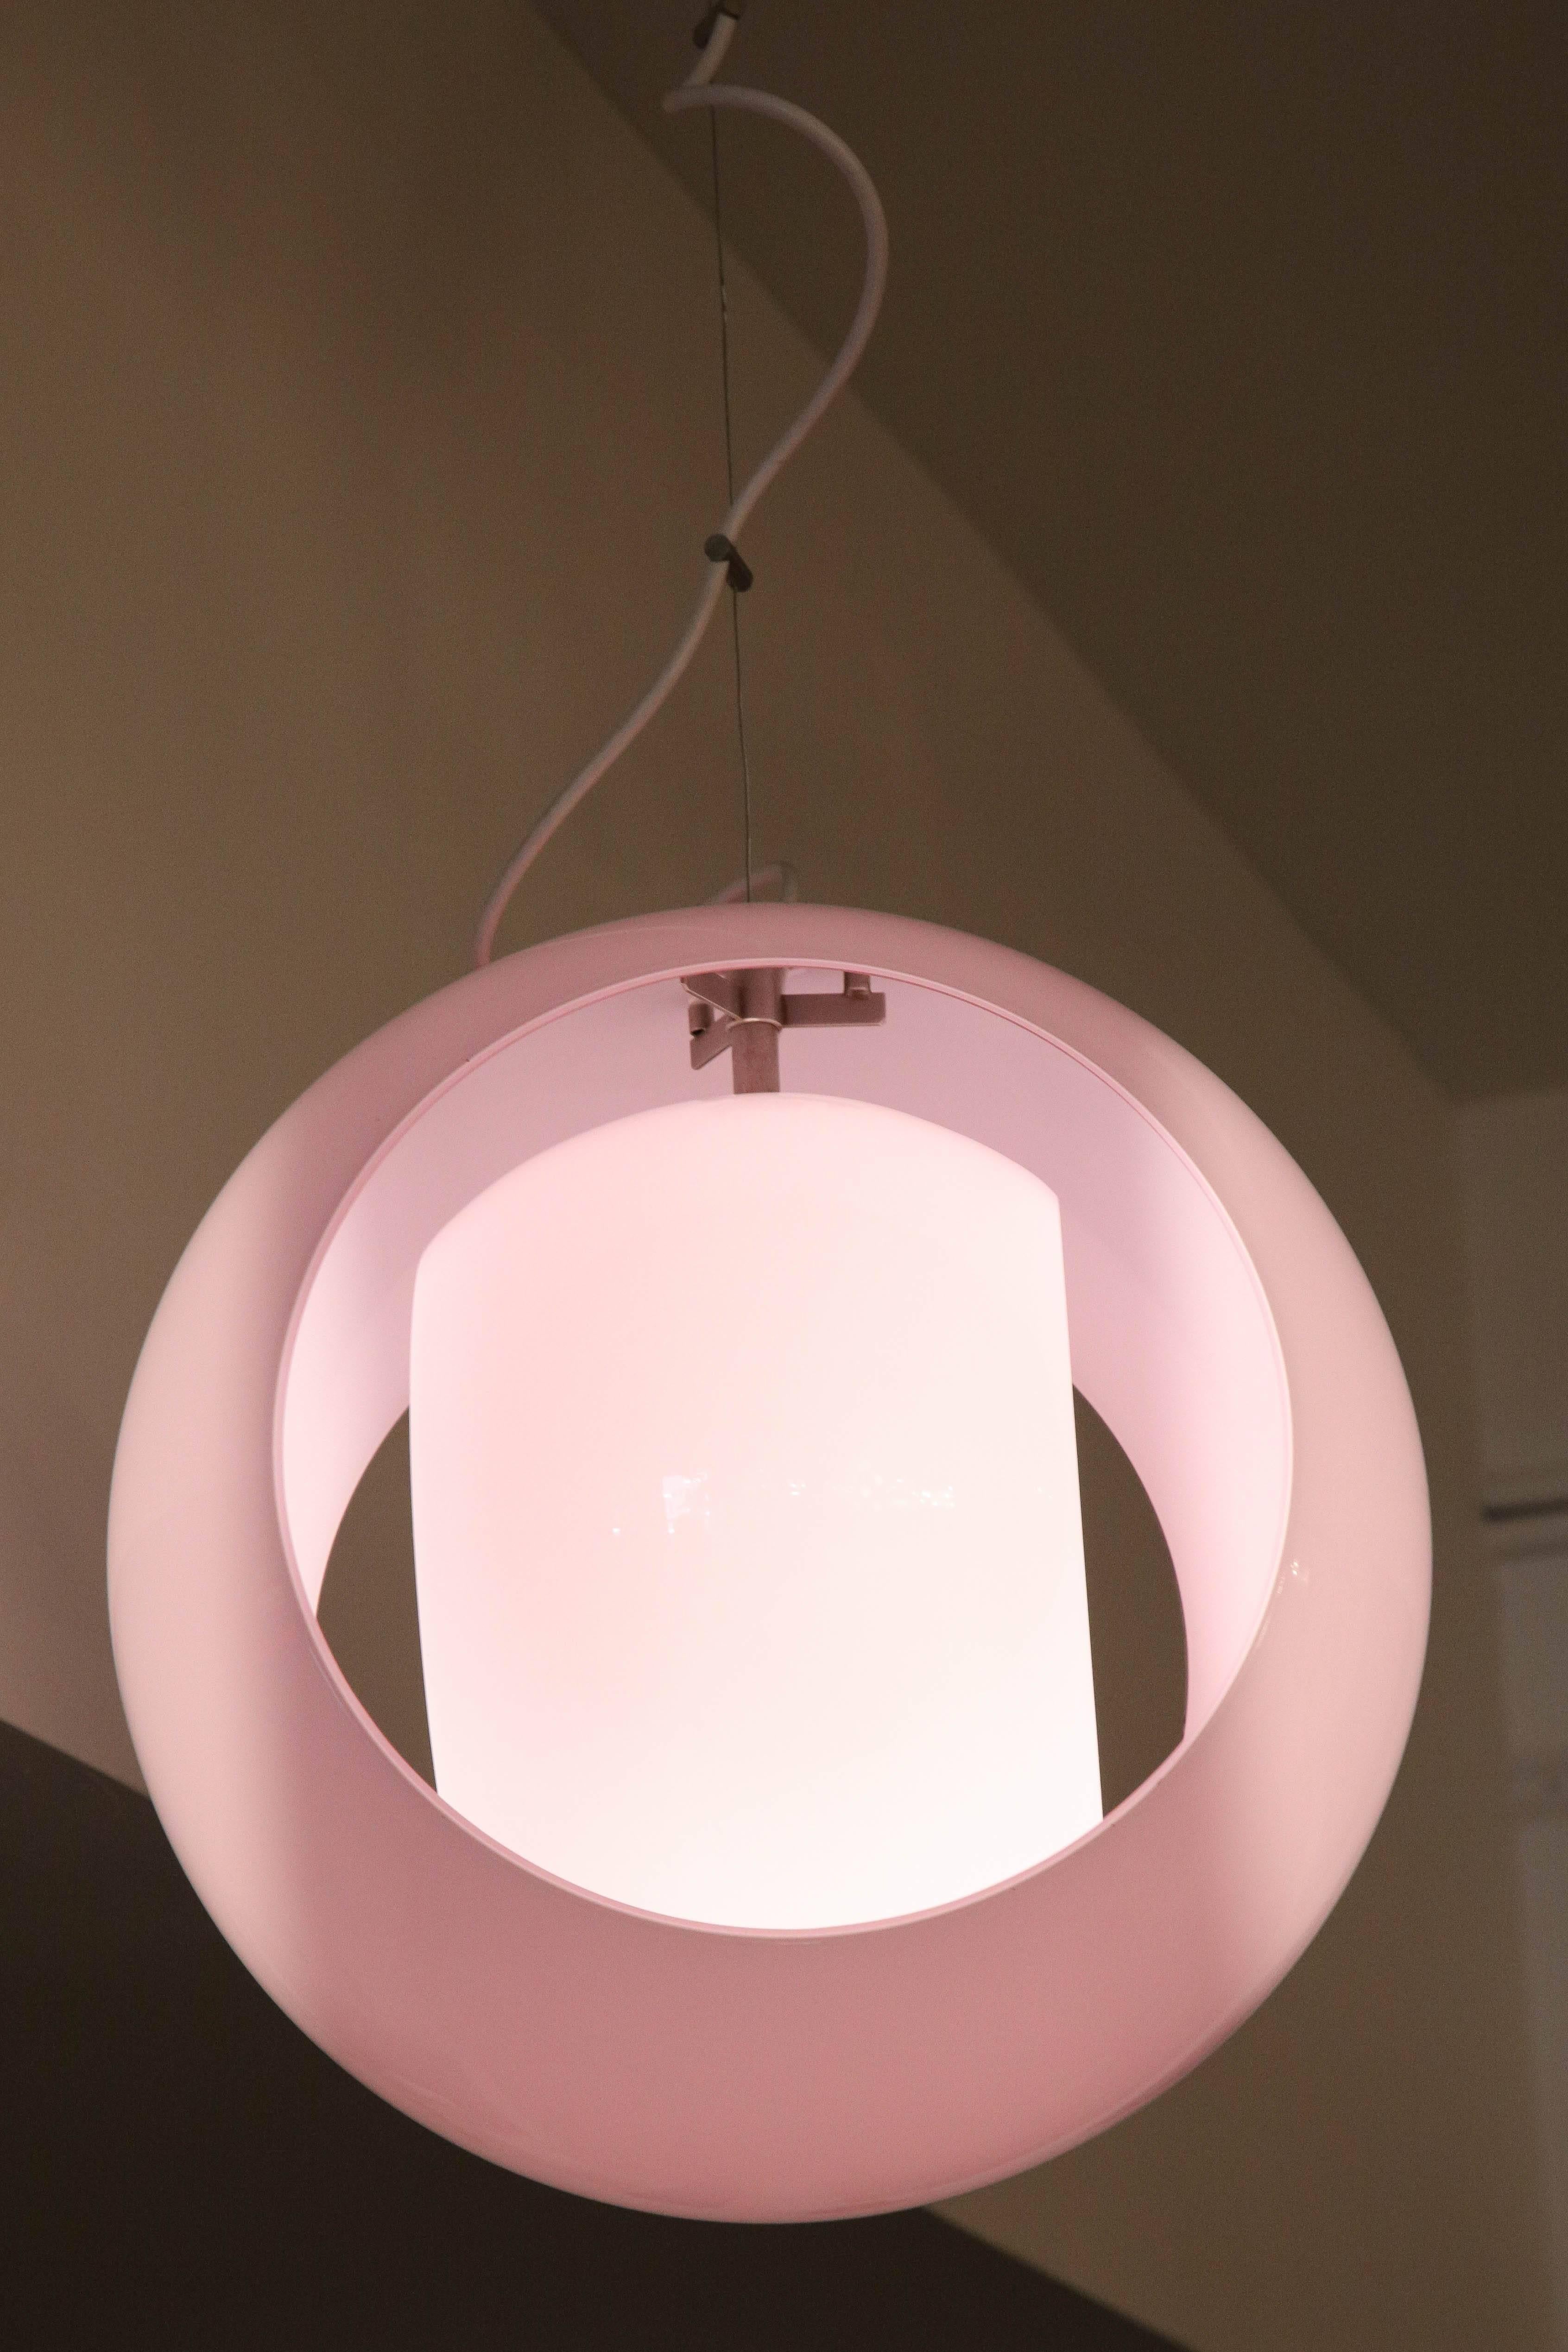 Vistosi pendent light italian designed by Gino Vistosi For Sale 2